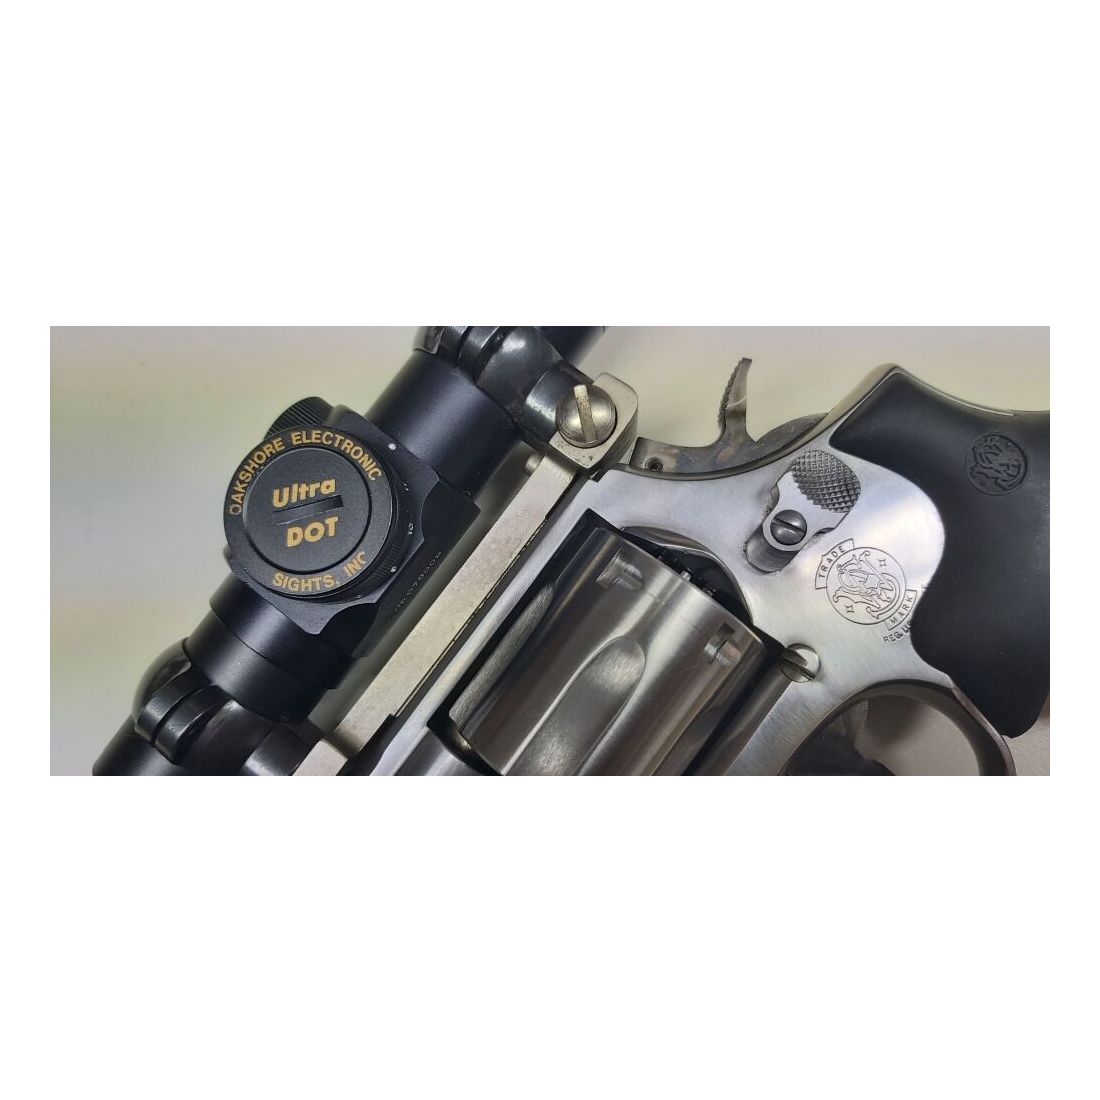 Smith & Wesson	 Mod. 686-4